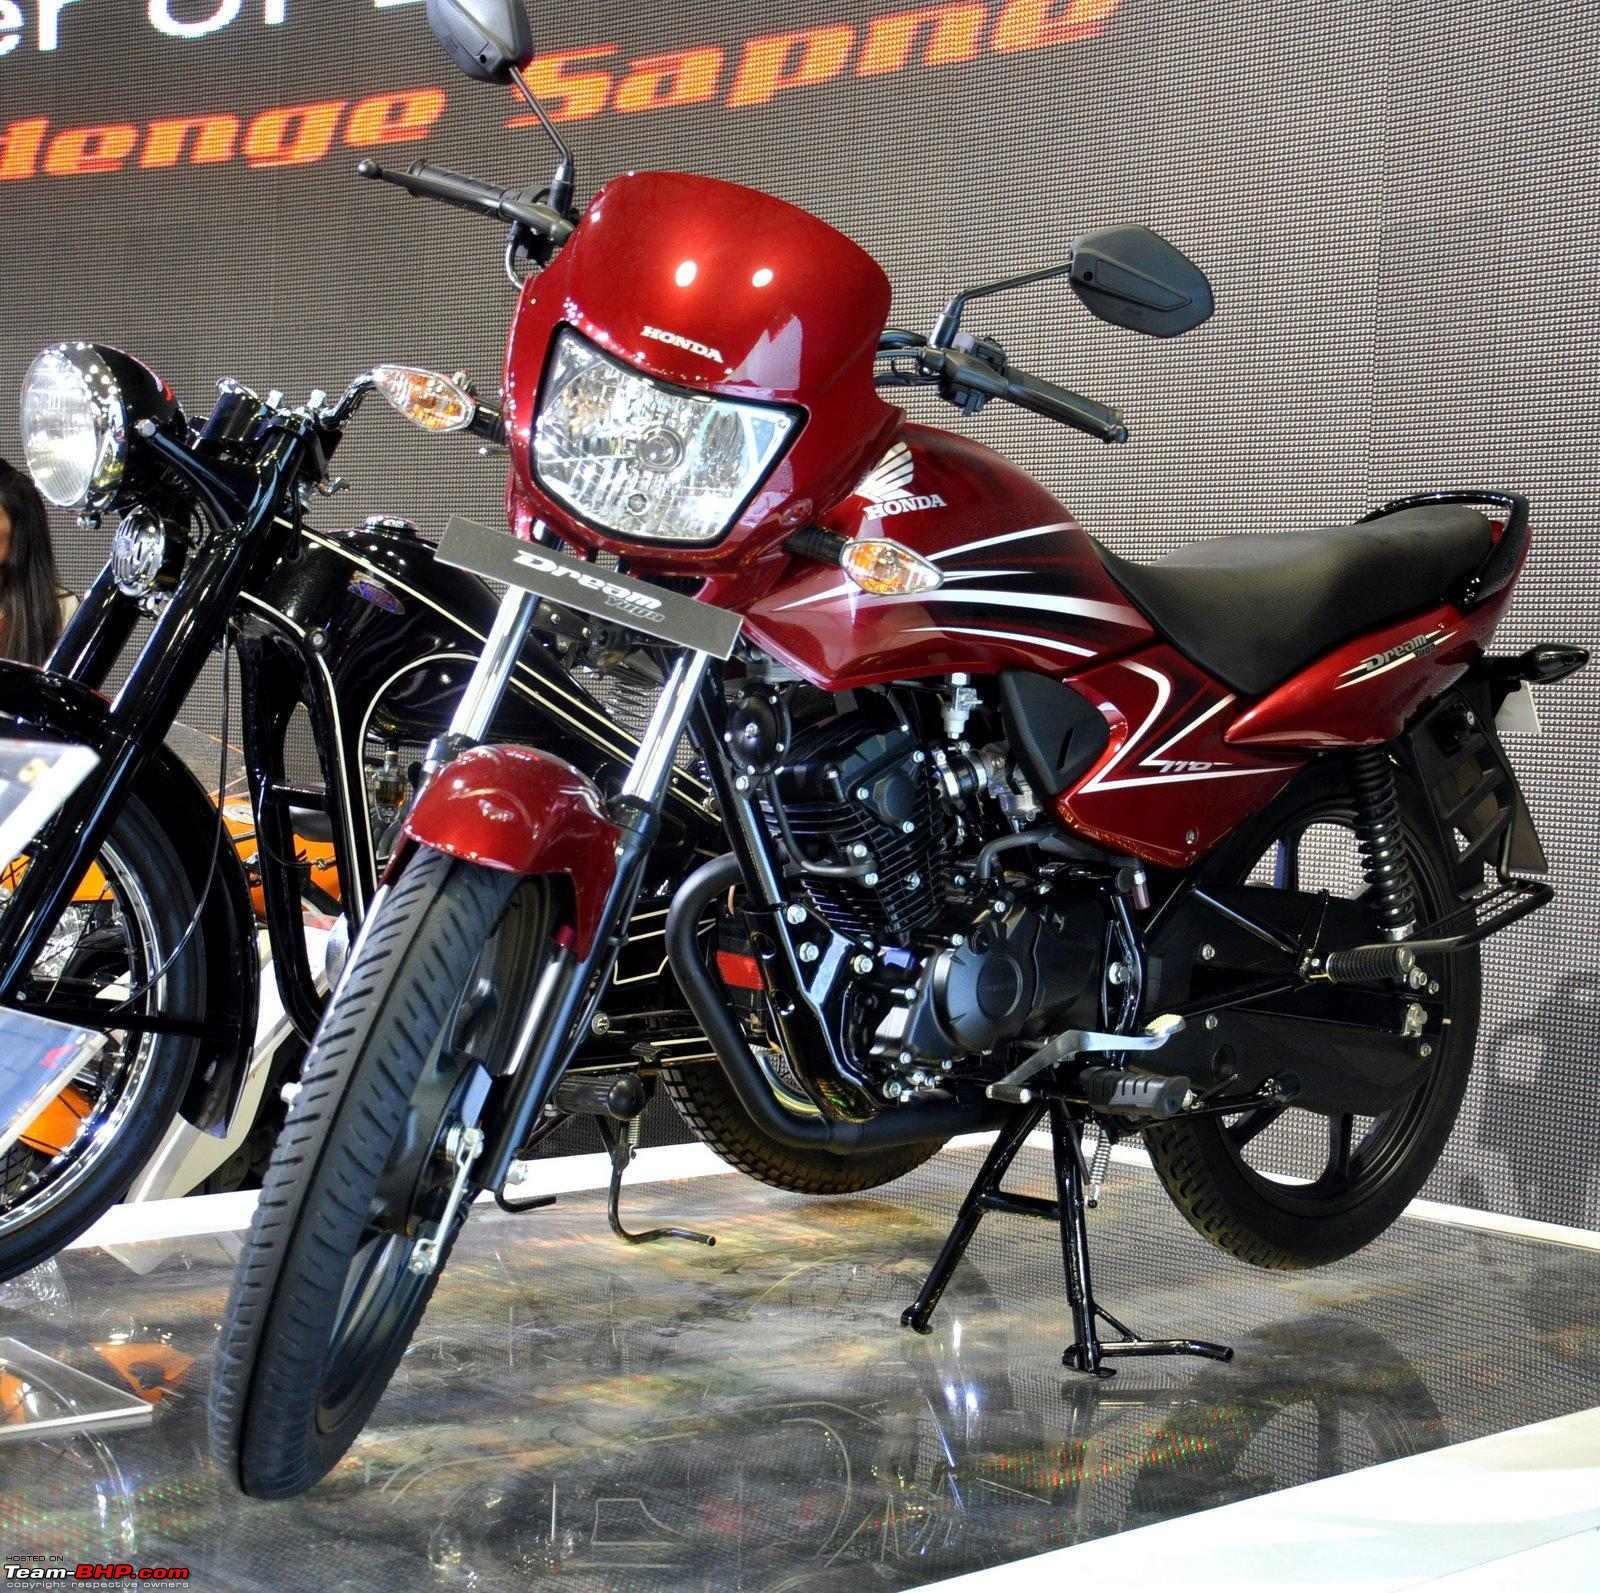 Honda to launch 100cc competitor to the Splendor TeamBHP